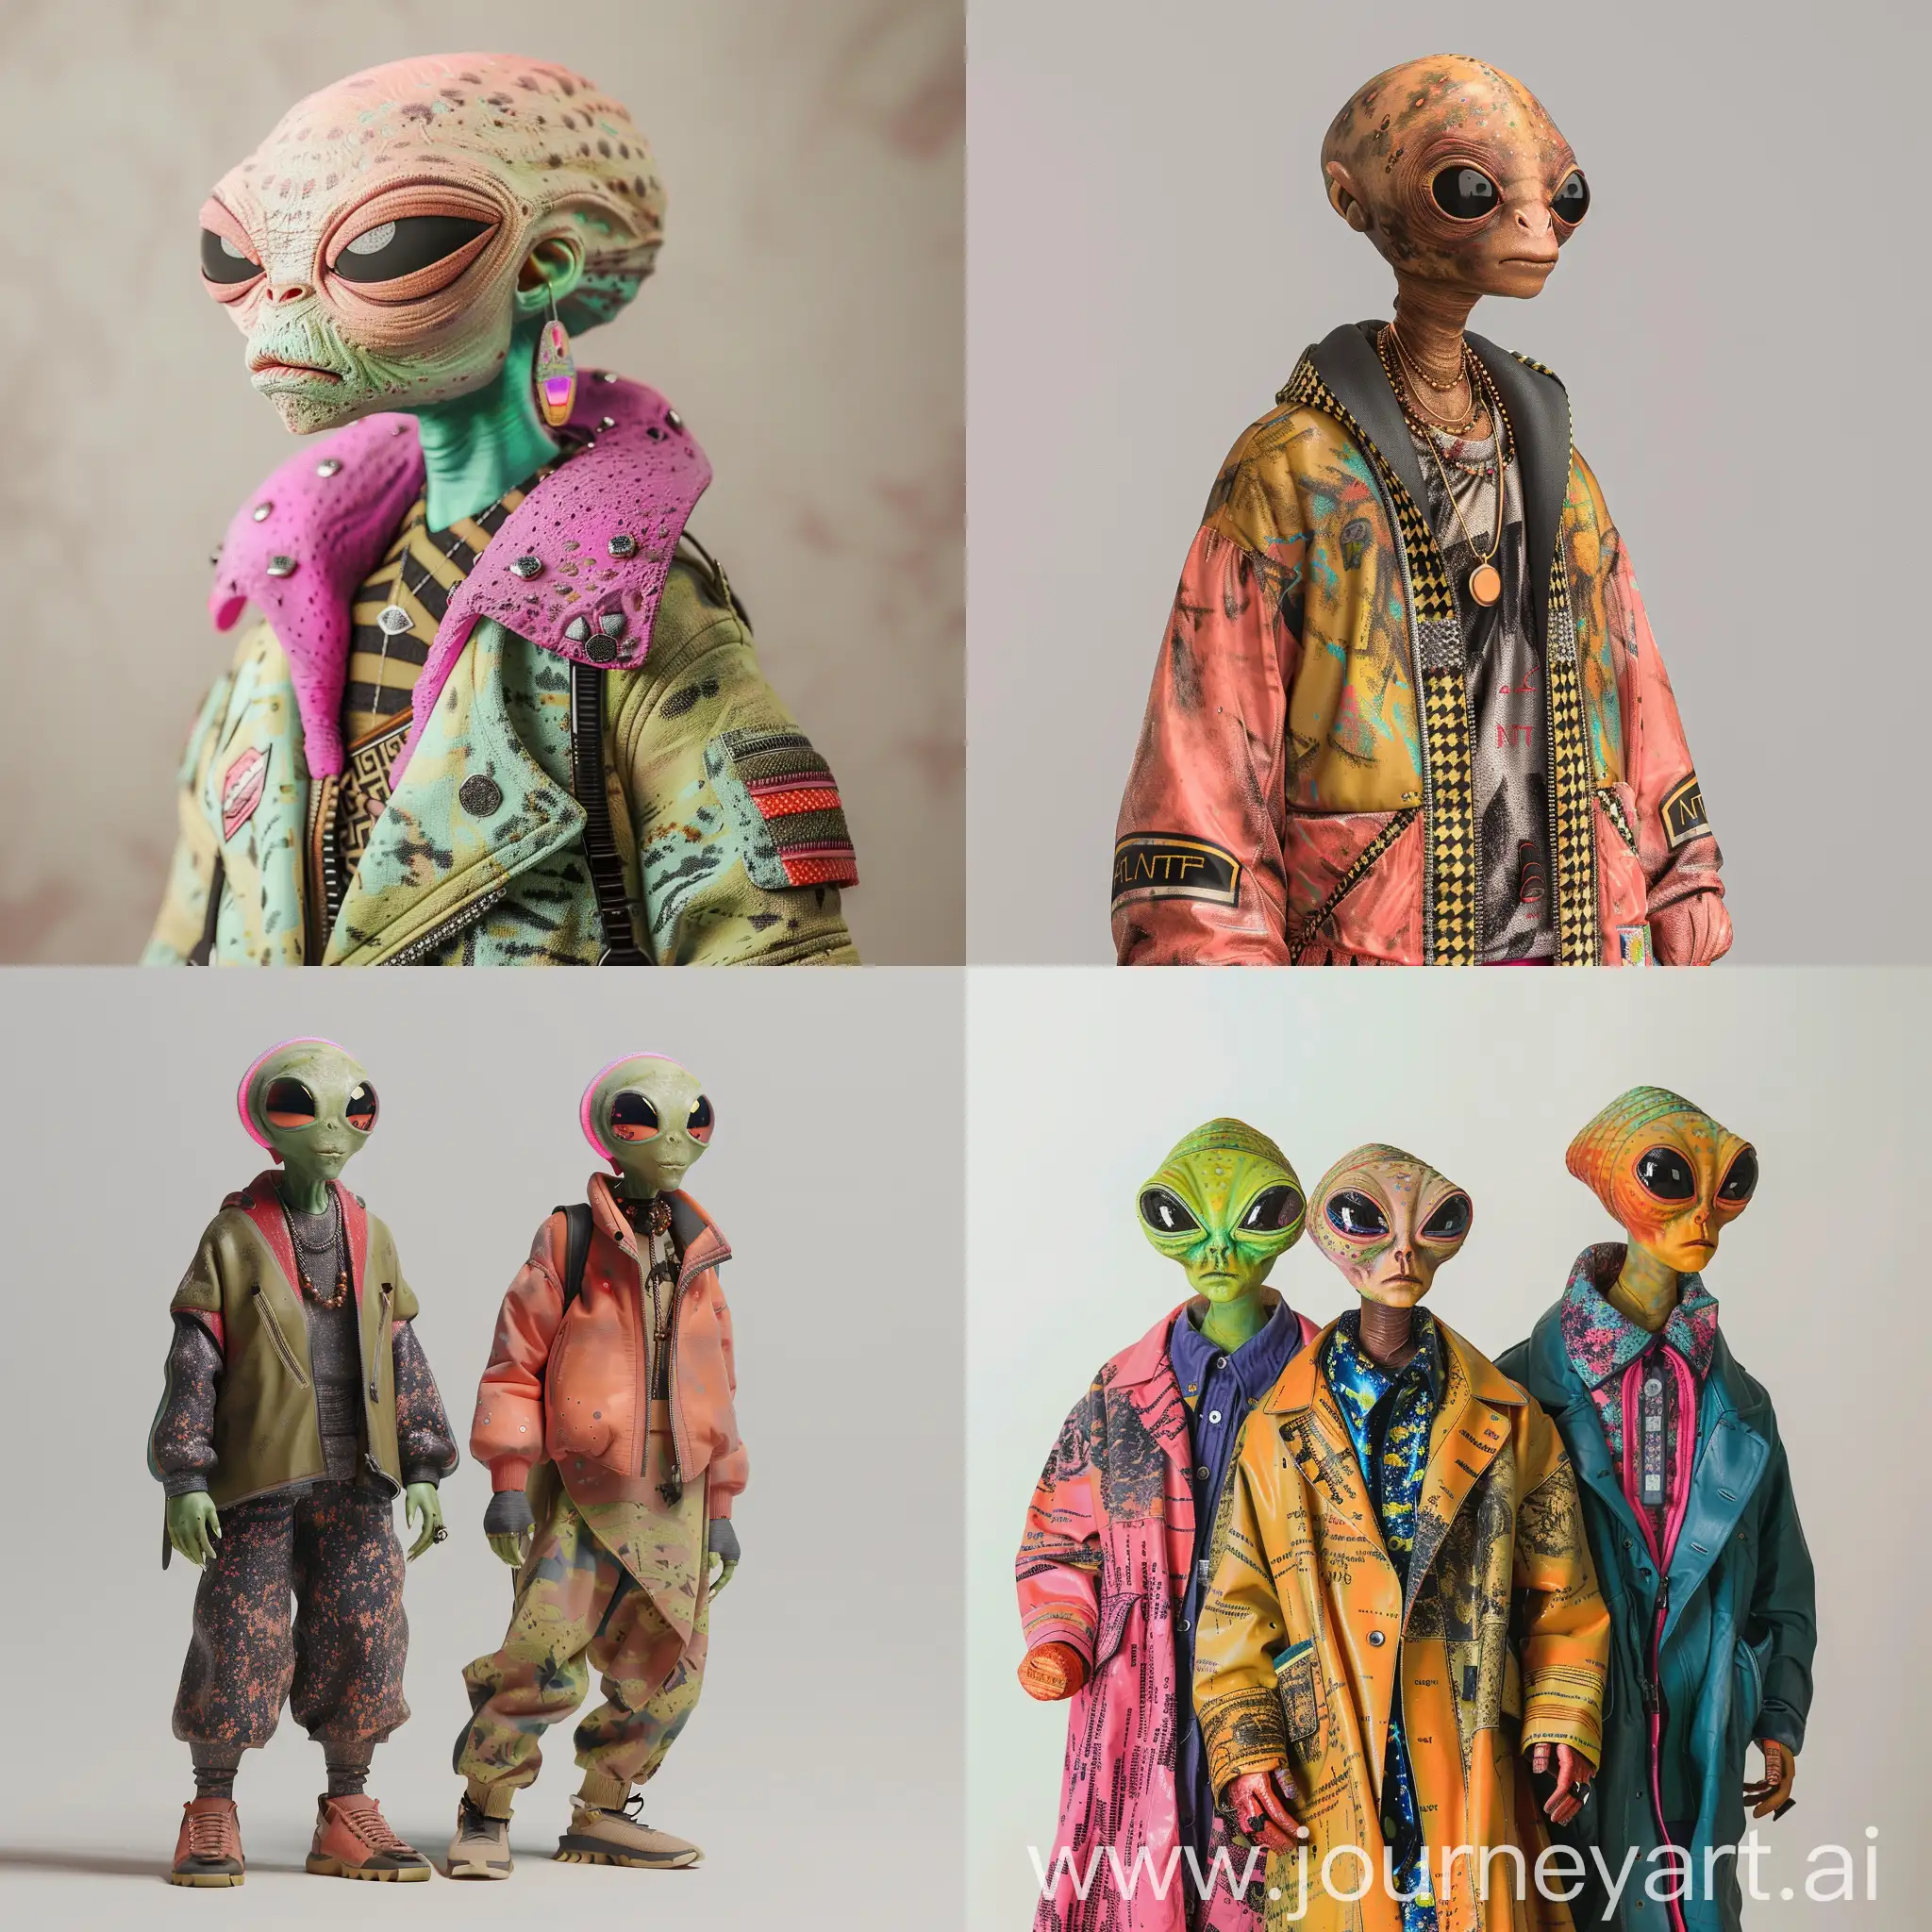 Fashionable-Mars-Aliens-in-Balenciaga-Style-Clothing